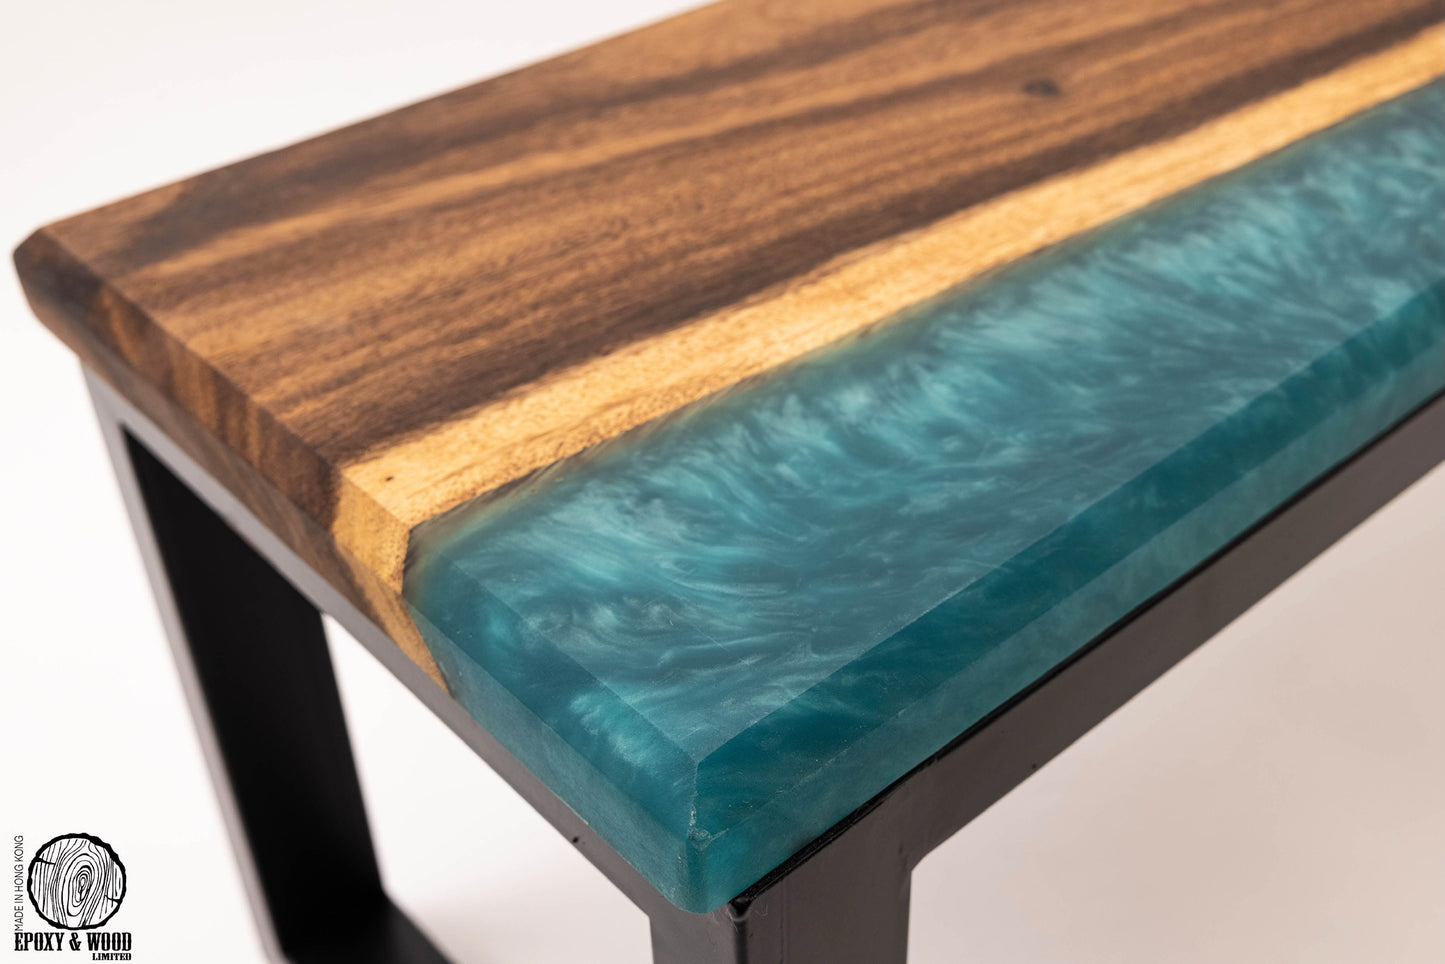 Handmade Walnut Wood Bench with Glittery Blue Epoxy